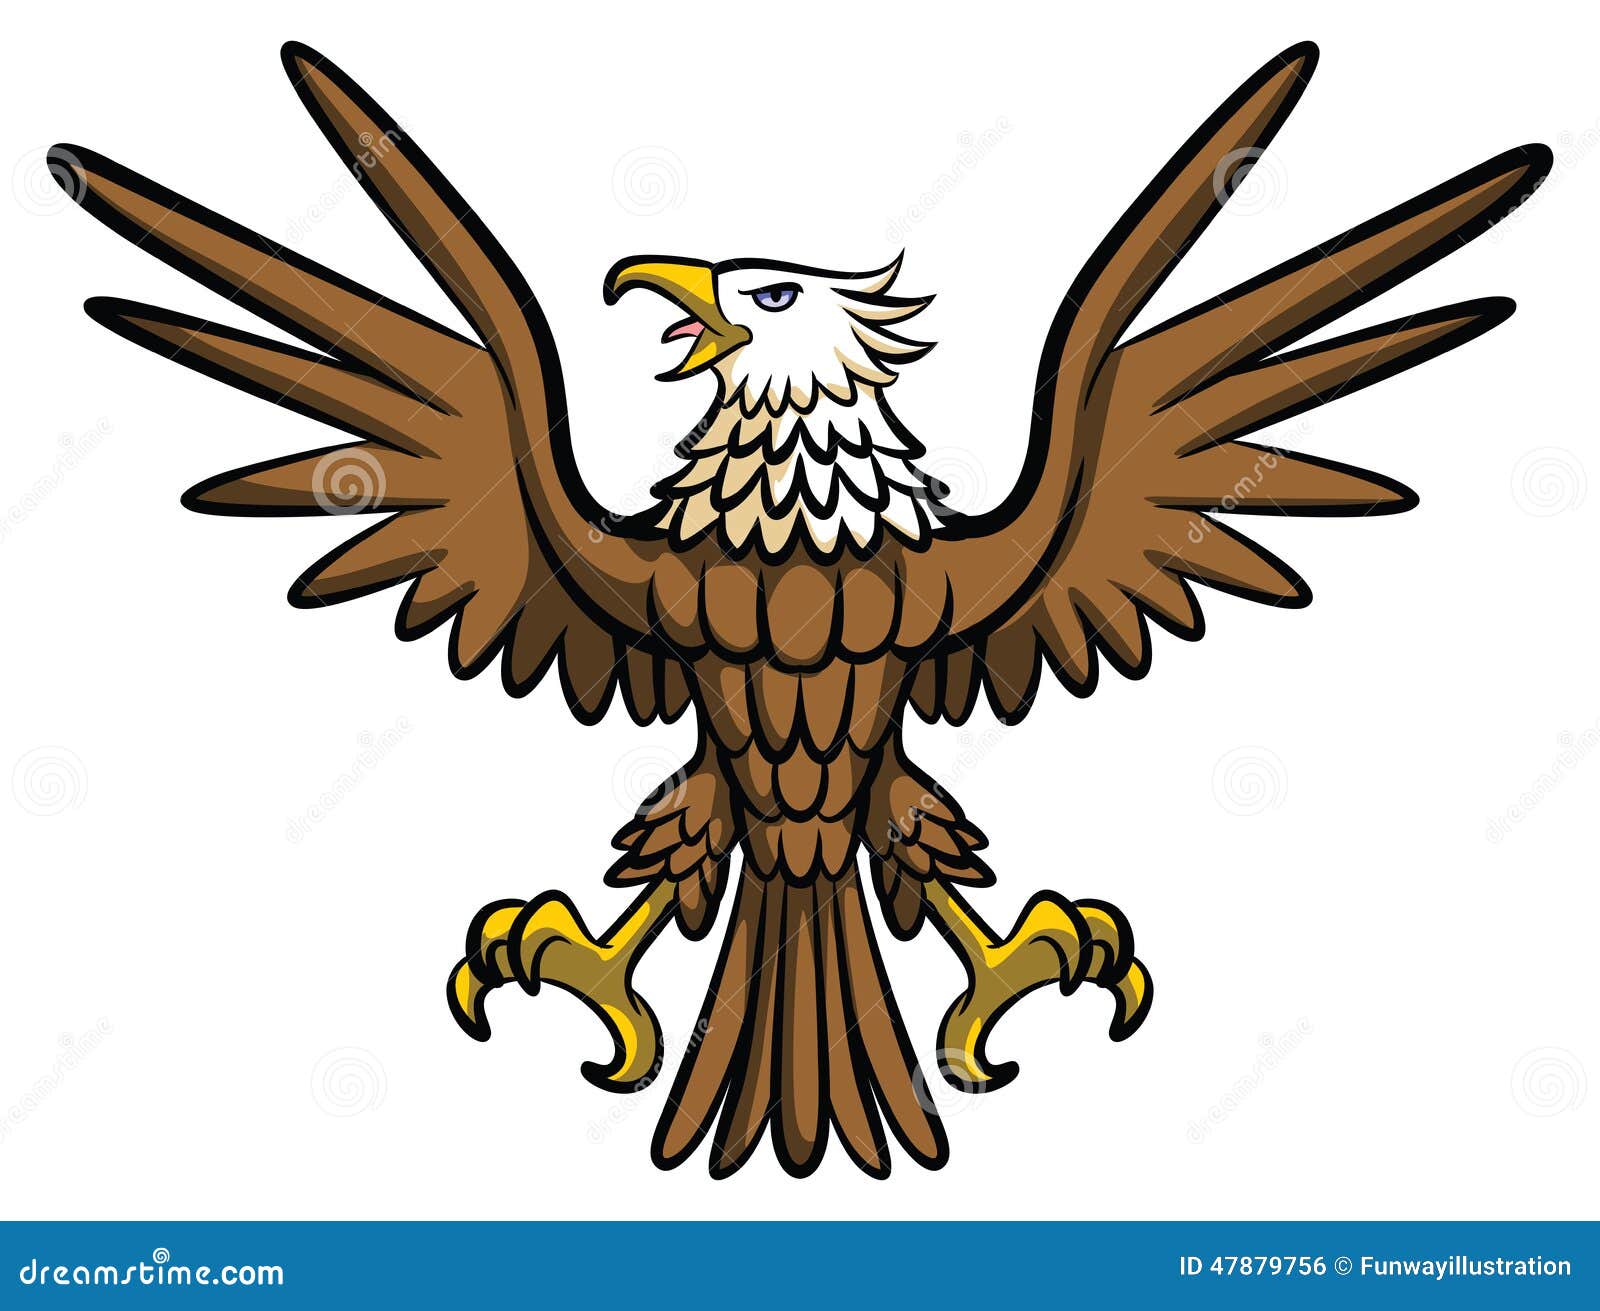 federal eagle free clip art - photo #46